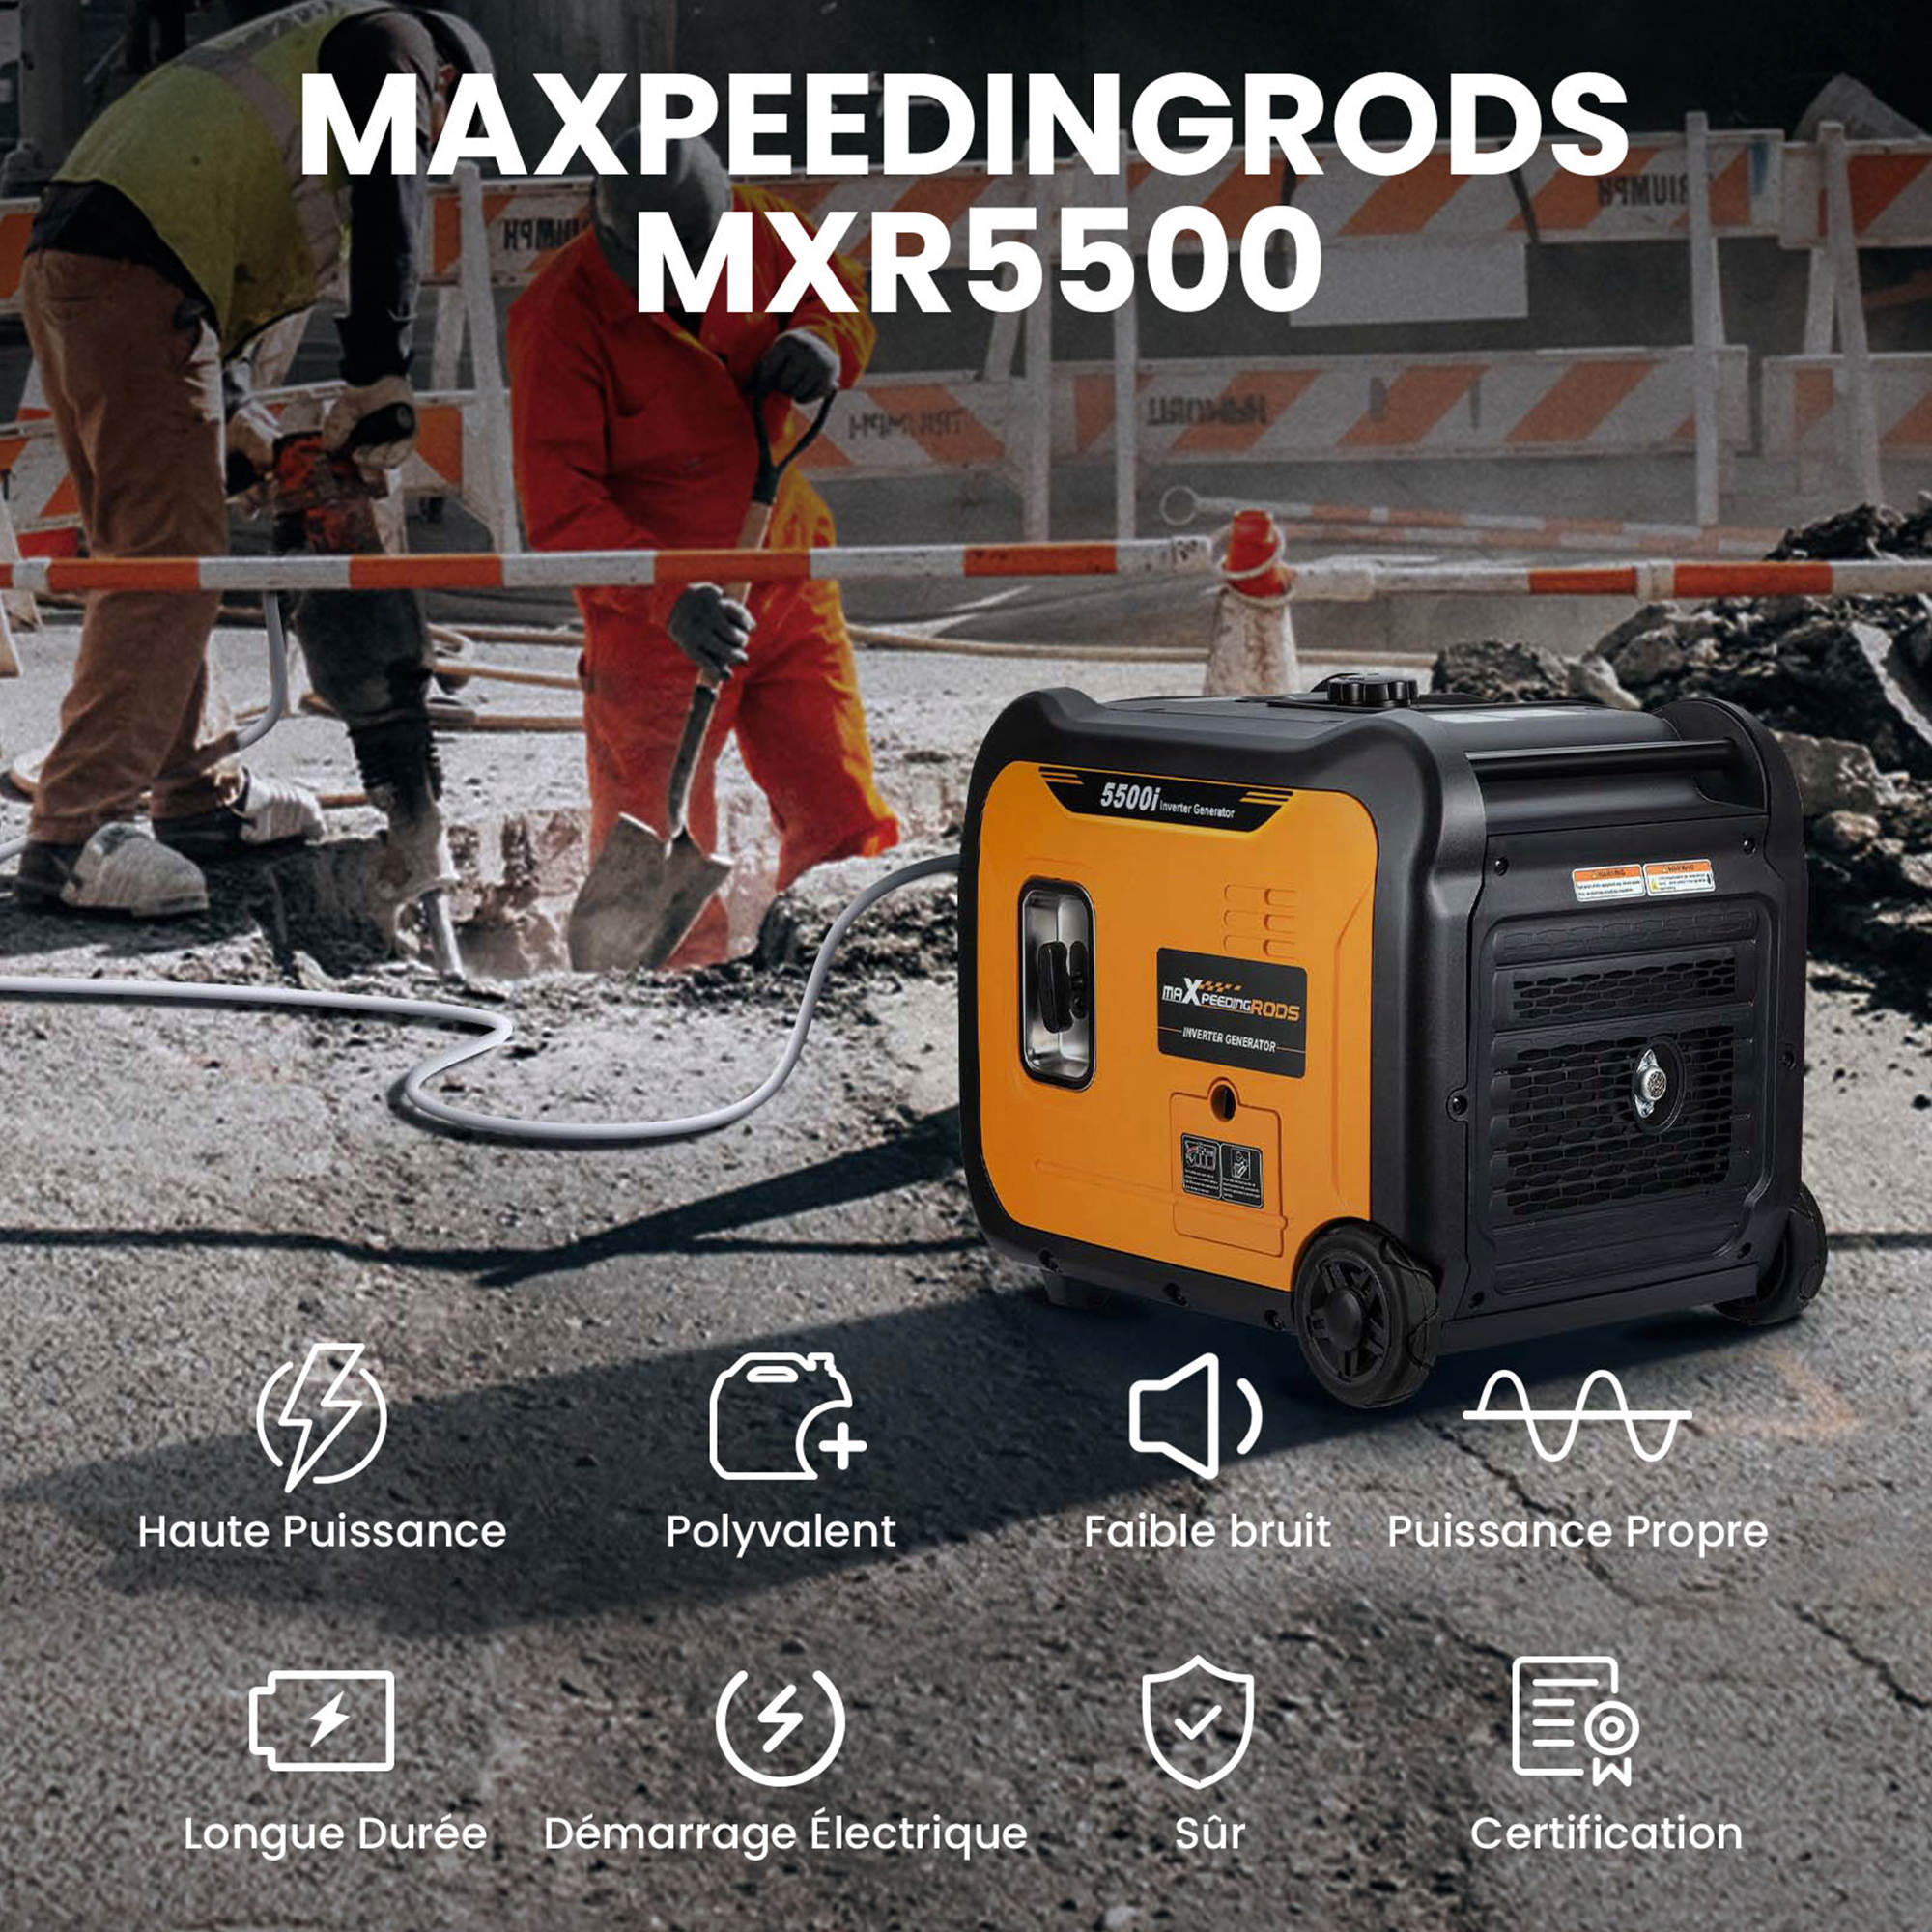 Maxpeedingrods 3500W Power Equipment Générateur d'onduleur